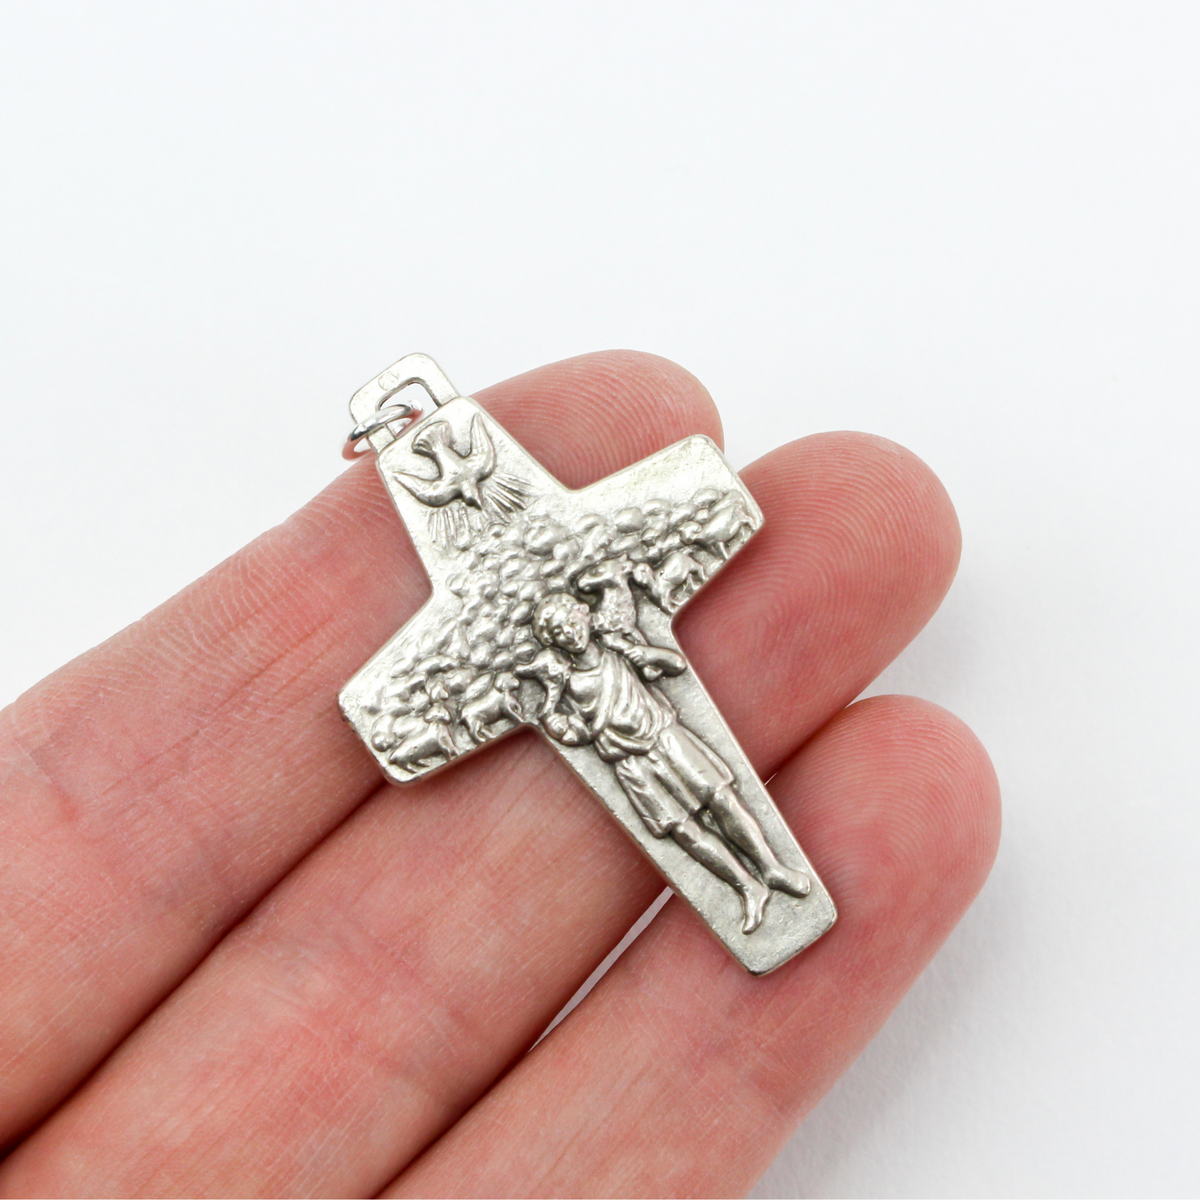 Papal Cross Key chain, Pope Francis Good Shepherd, Metal, 2, Italy